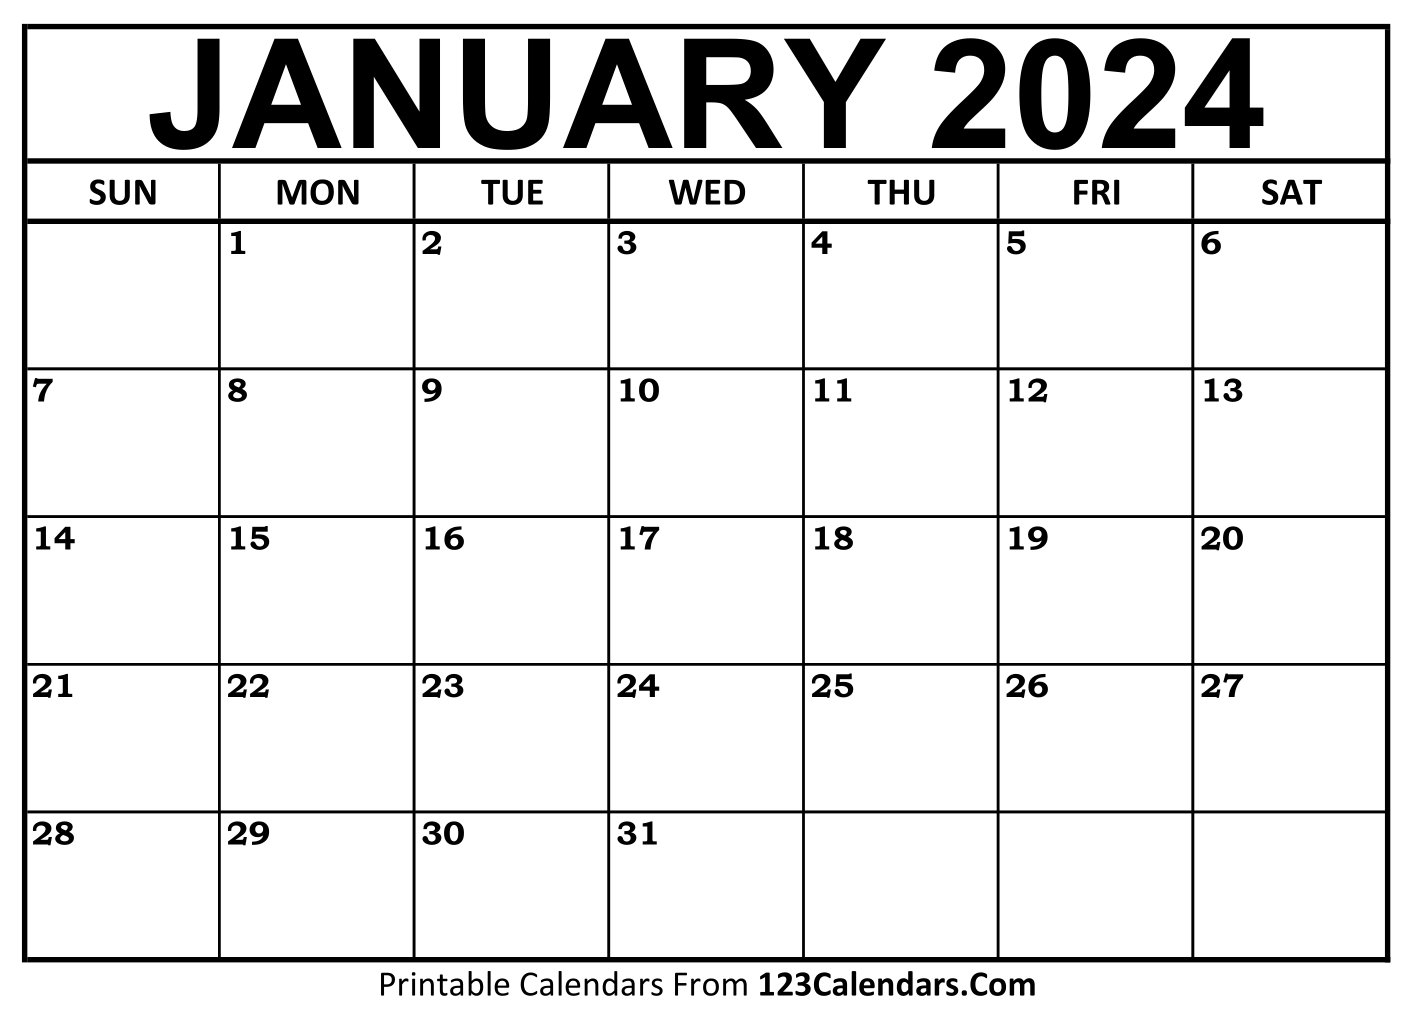 Printable January 2024 Calendar Templates - 123Calendars for January 2024 Printable Calendar